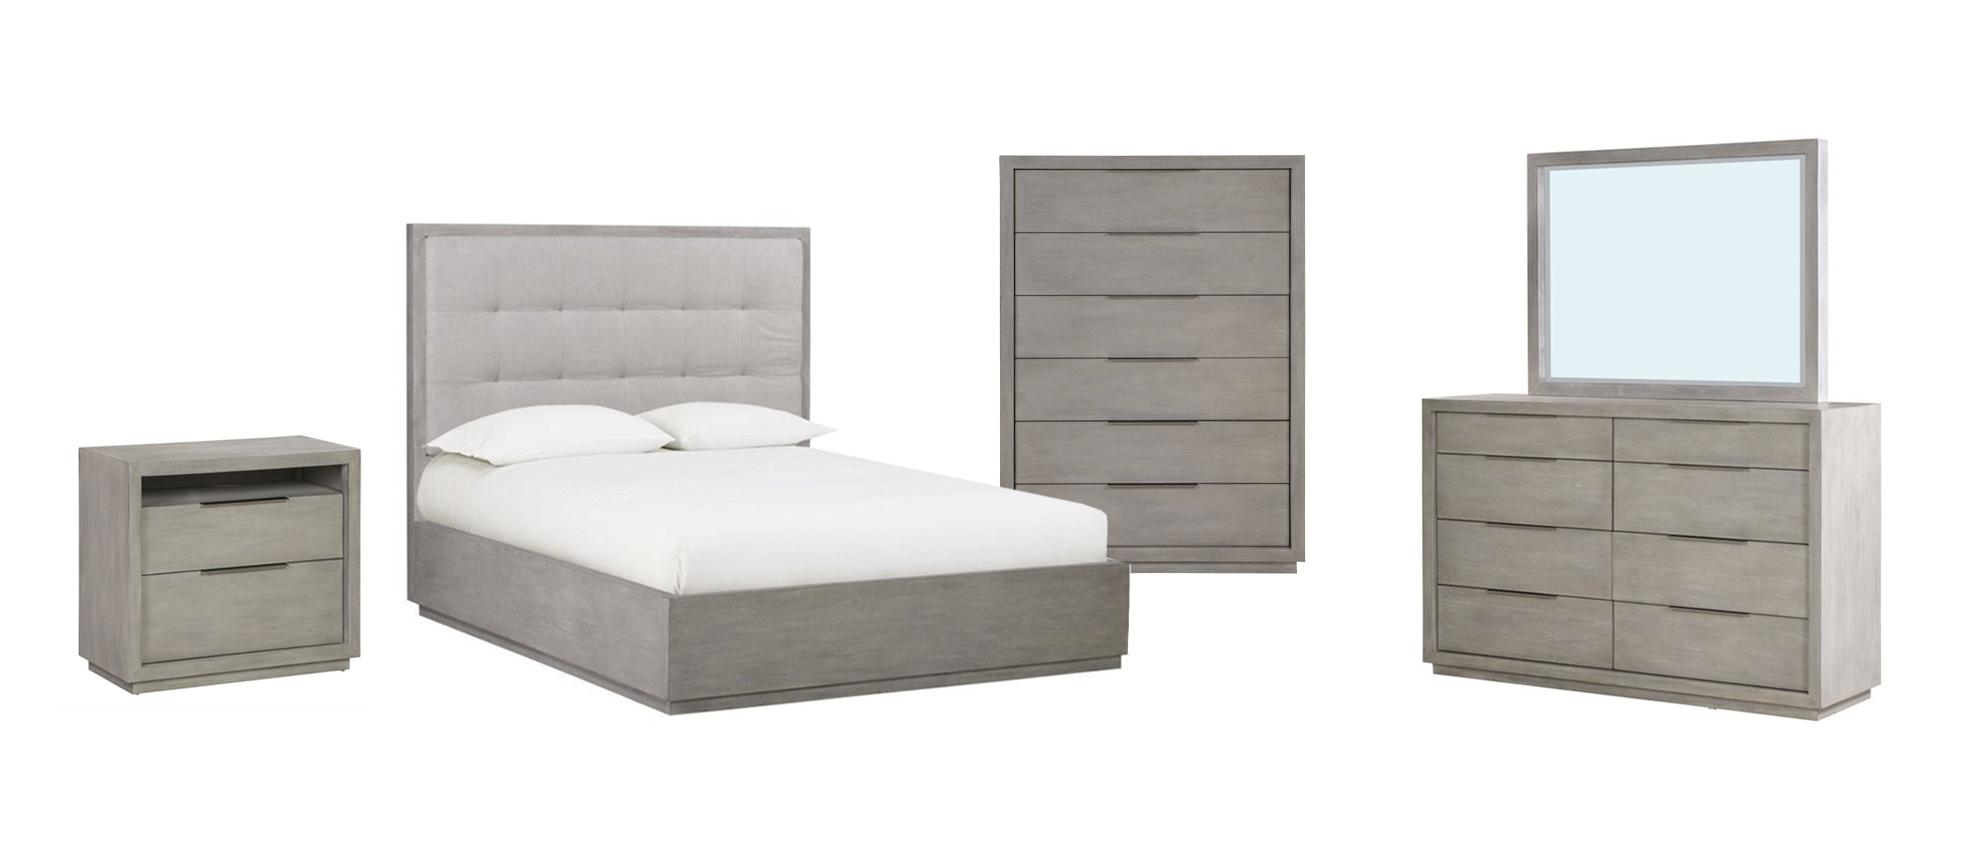 Contemporary Platform Bedroom Set OXFORD AZBXF5-NDMC-5PC in Light Gray, Stone Fabric